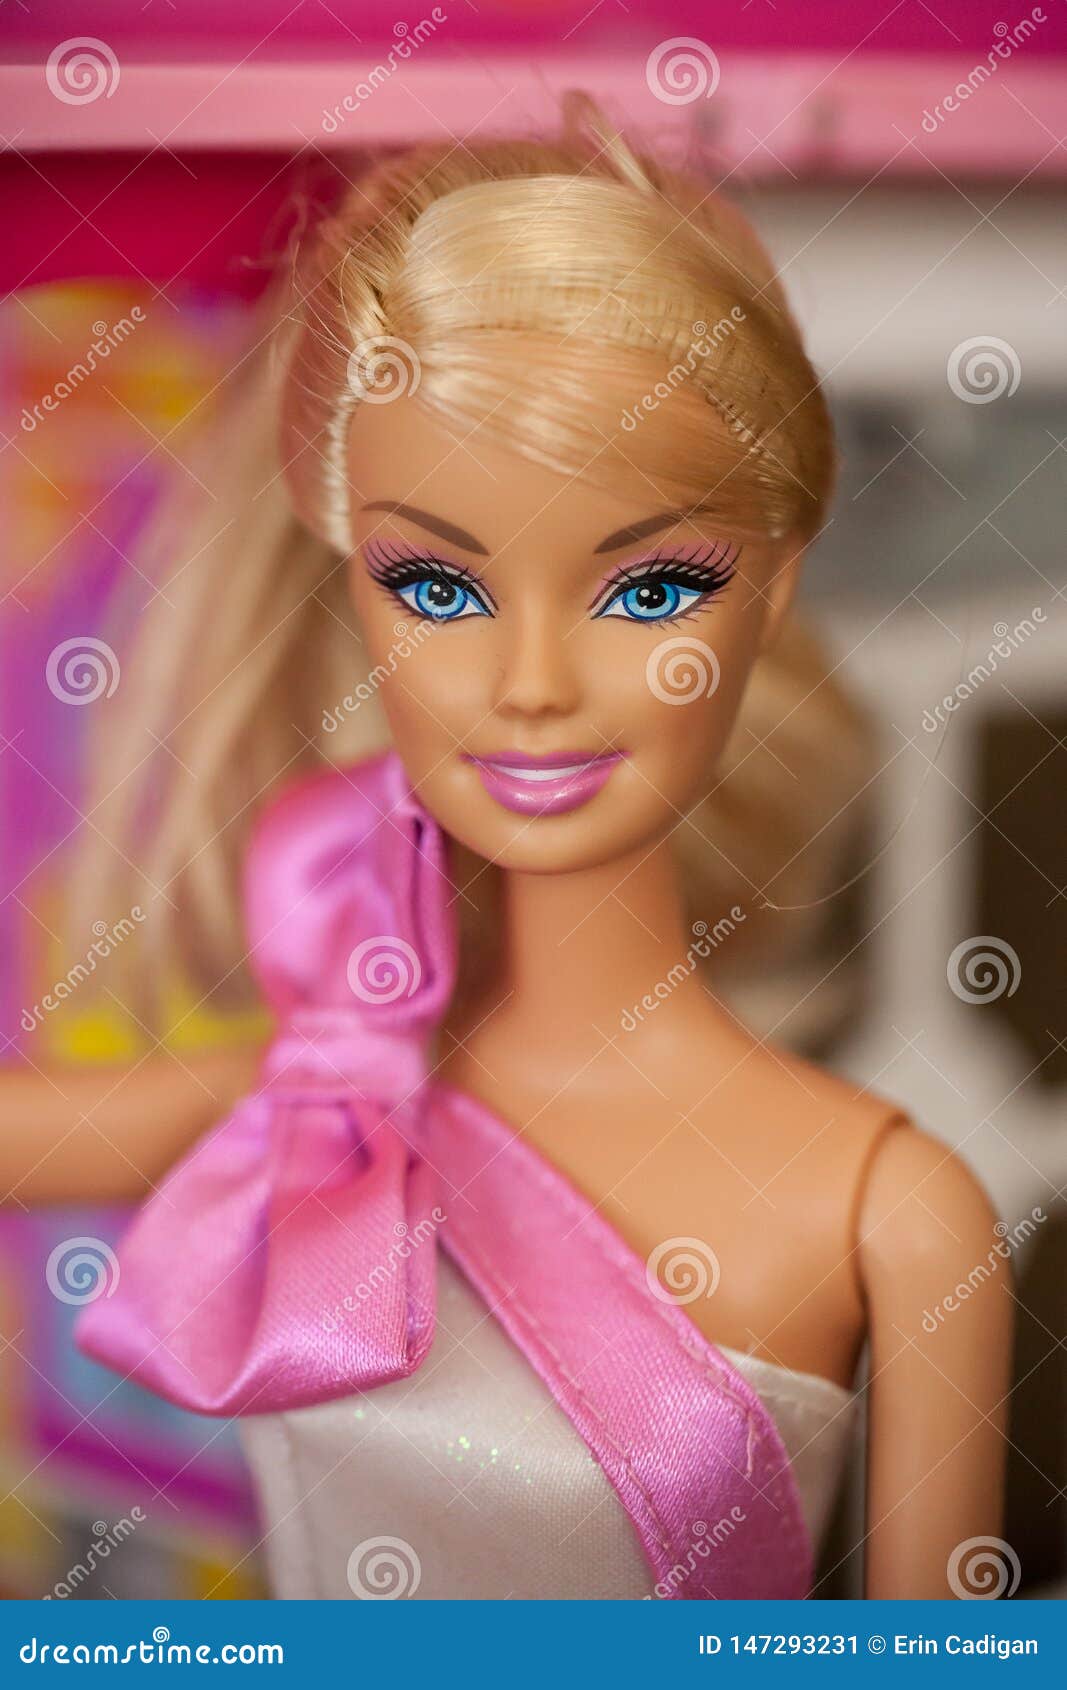 veerboot Broers en zussen Verstoring 2000s Era Verjaardag Barbie Doll Redactionele Foto - Image of amerika,  pret: 147293231